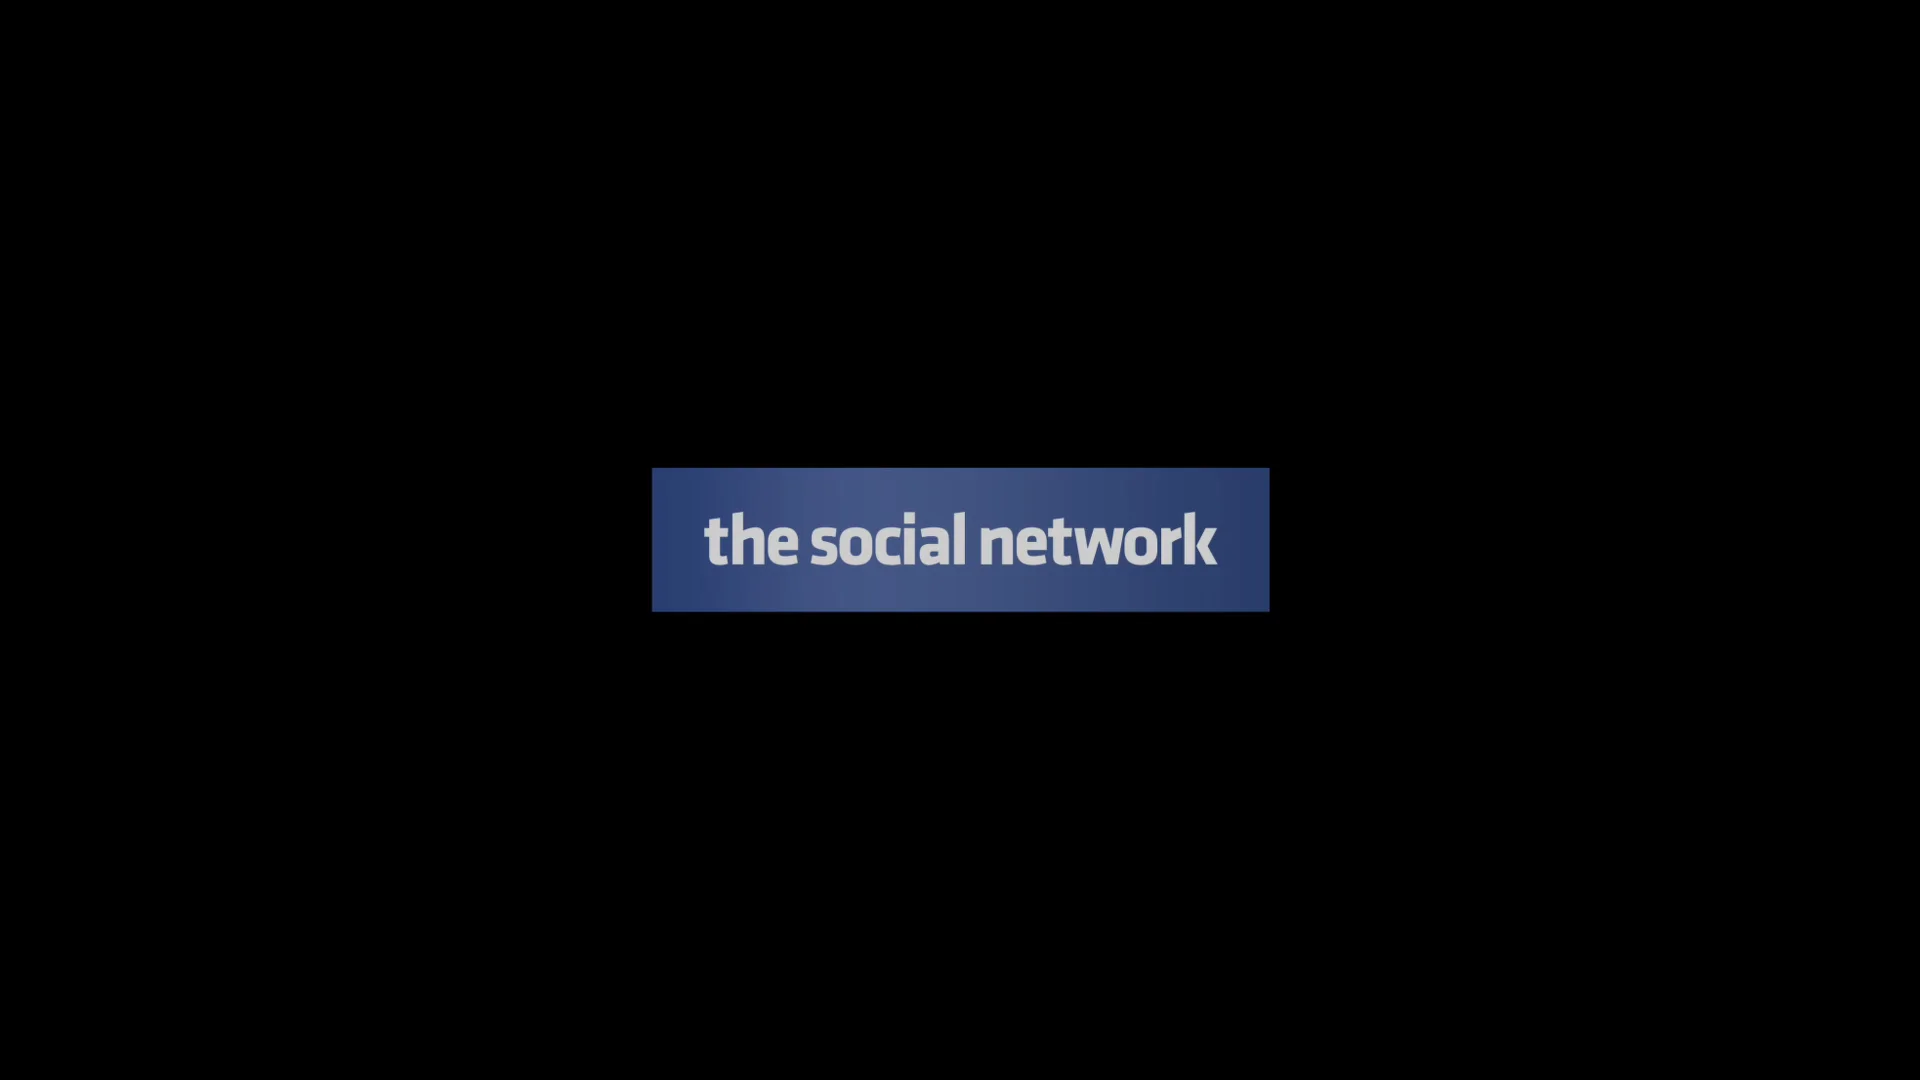 the social network wallpaper